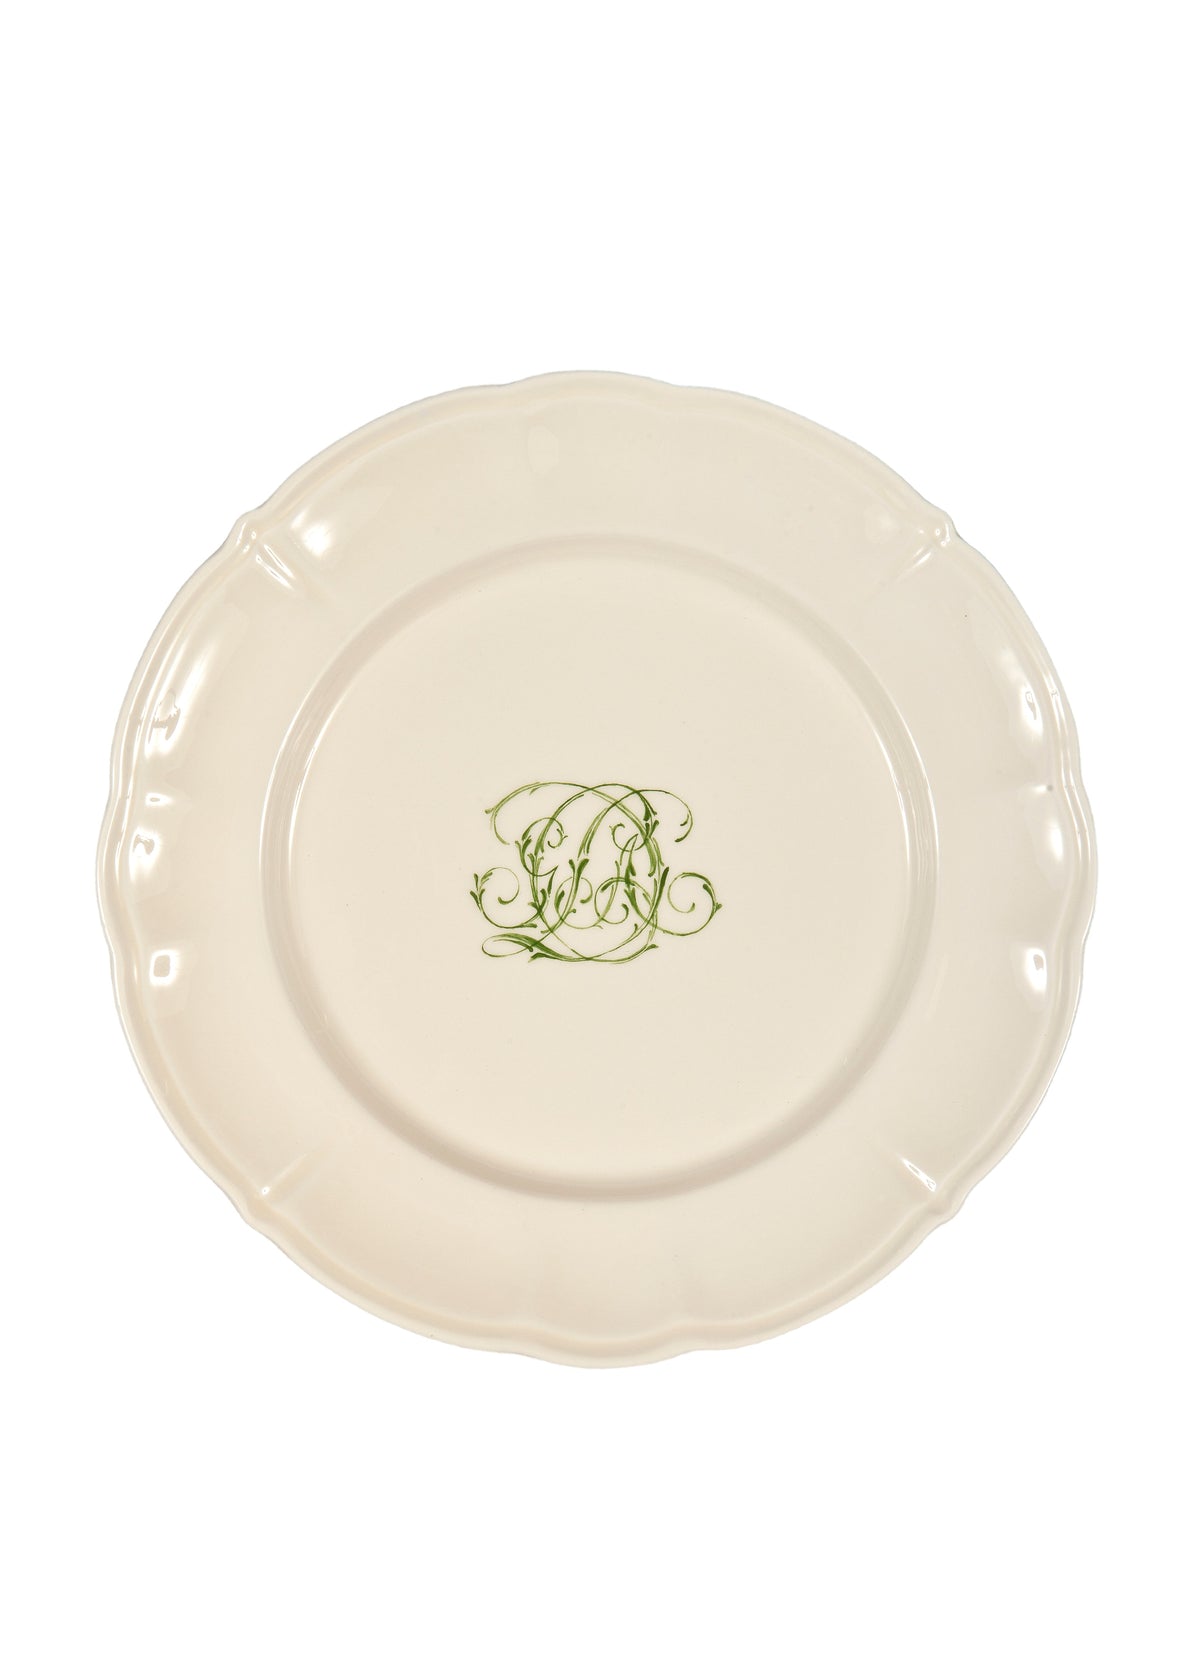 Bespoke Flourished Plate with Cursive Monogram, Set of 12